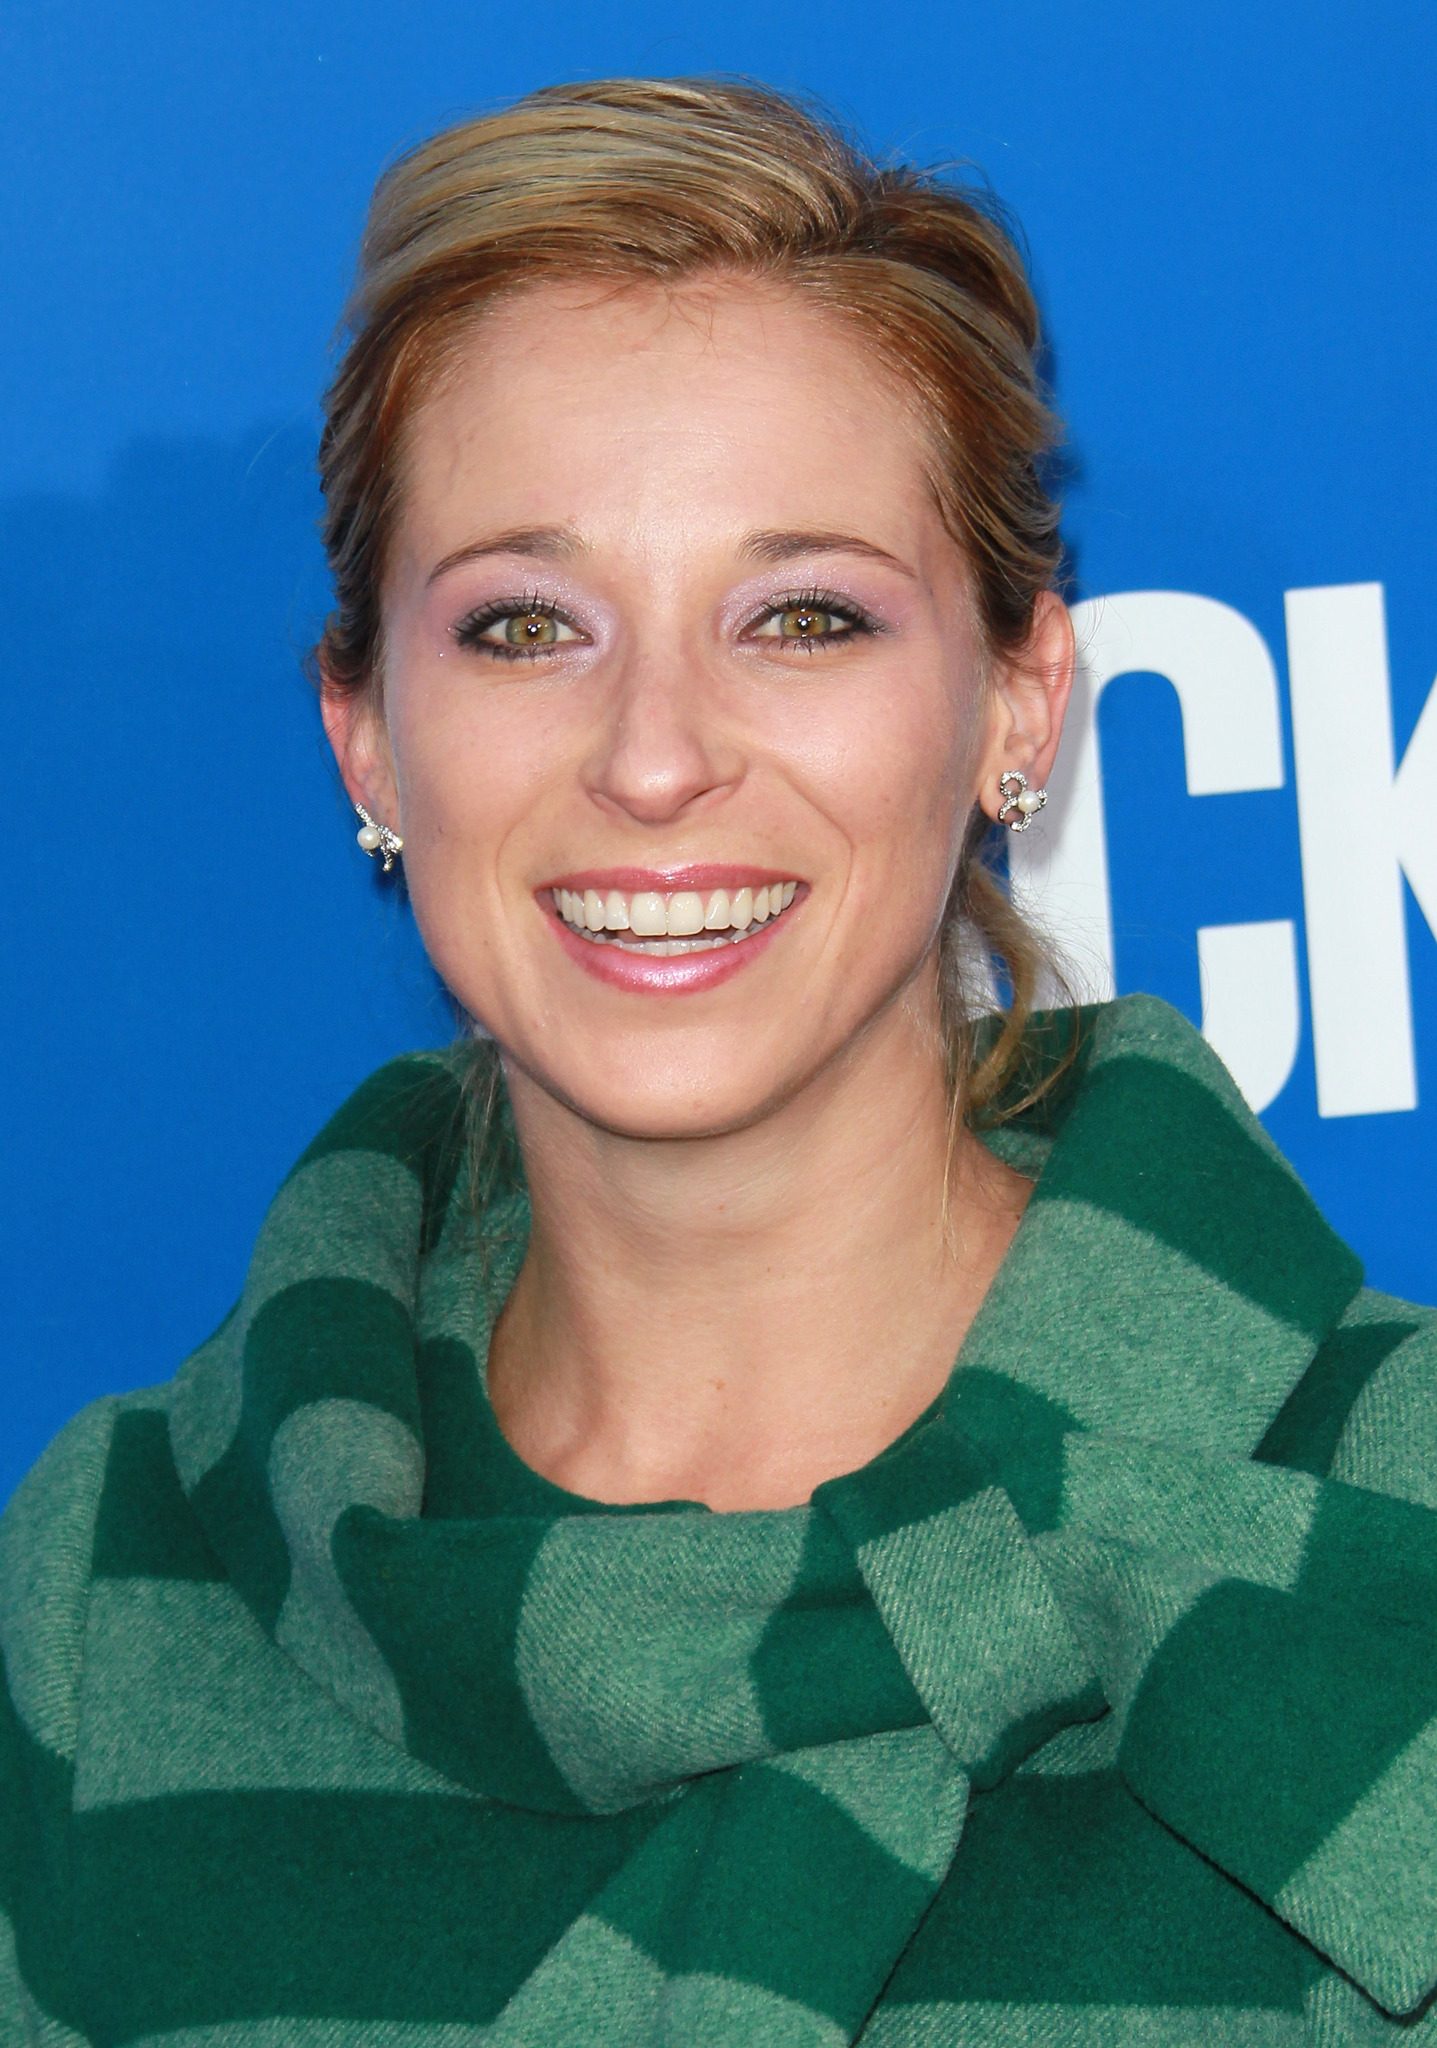 Lindsay Gareth at event of Dzekas ir Dzile (2011)